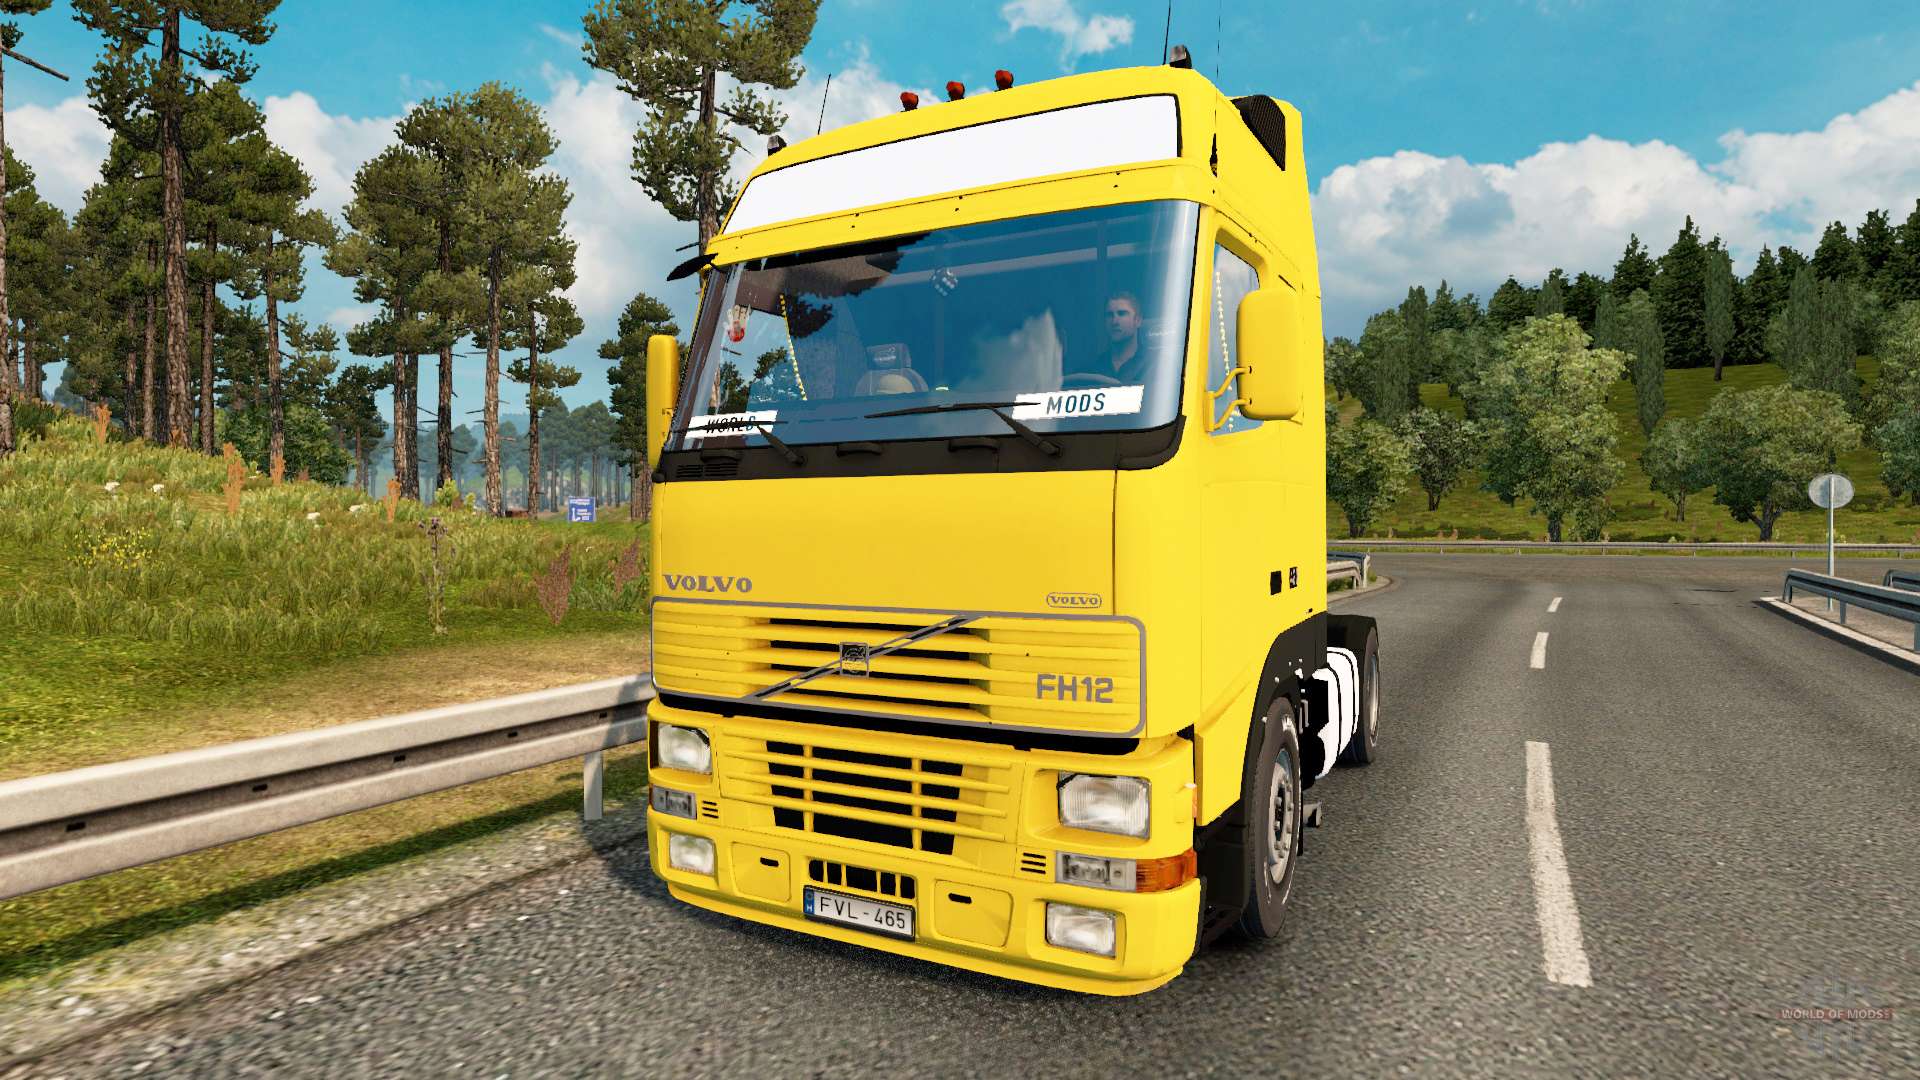  Volvo  FH12 v1 4 for Euro  Truck  Simulator  2 